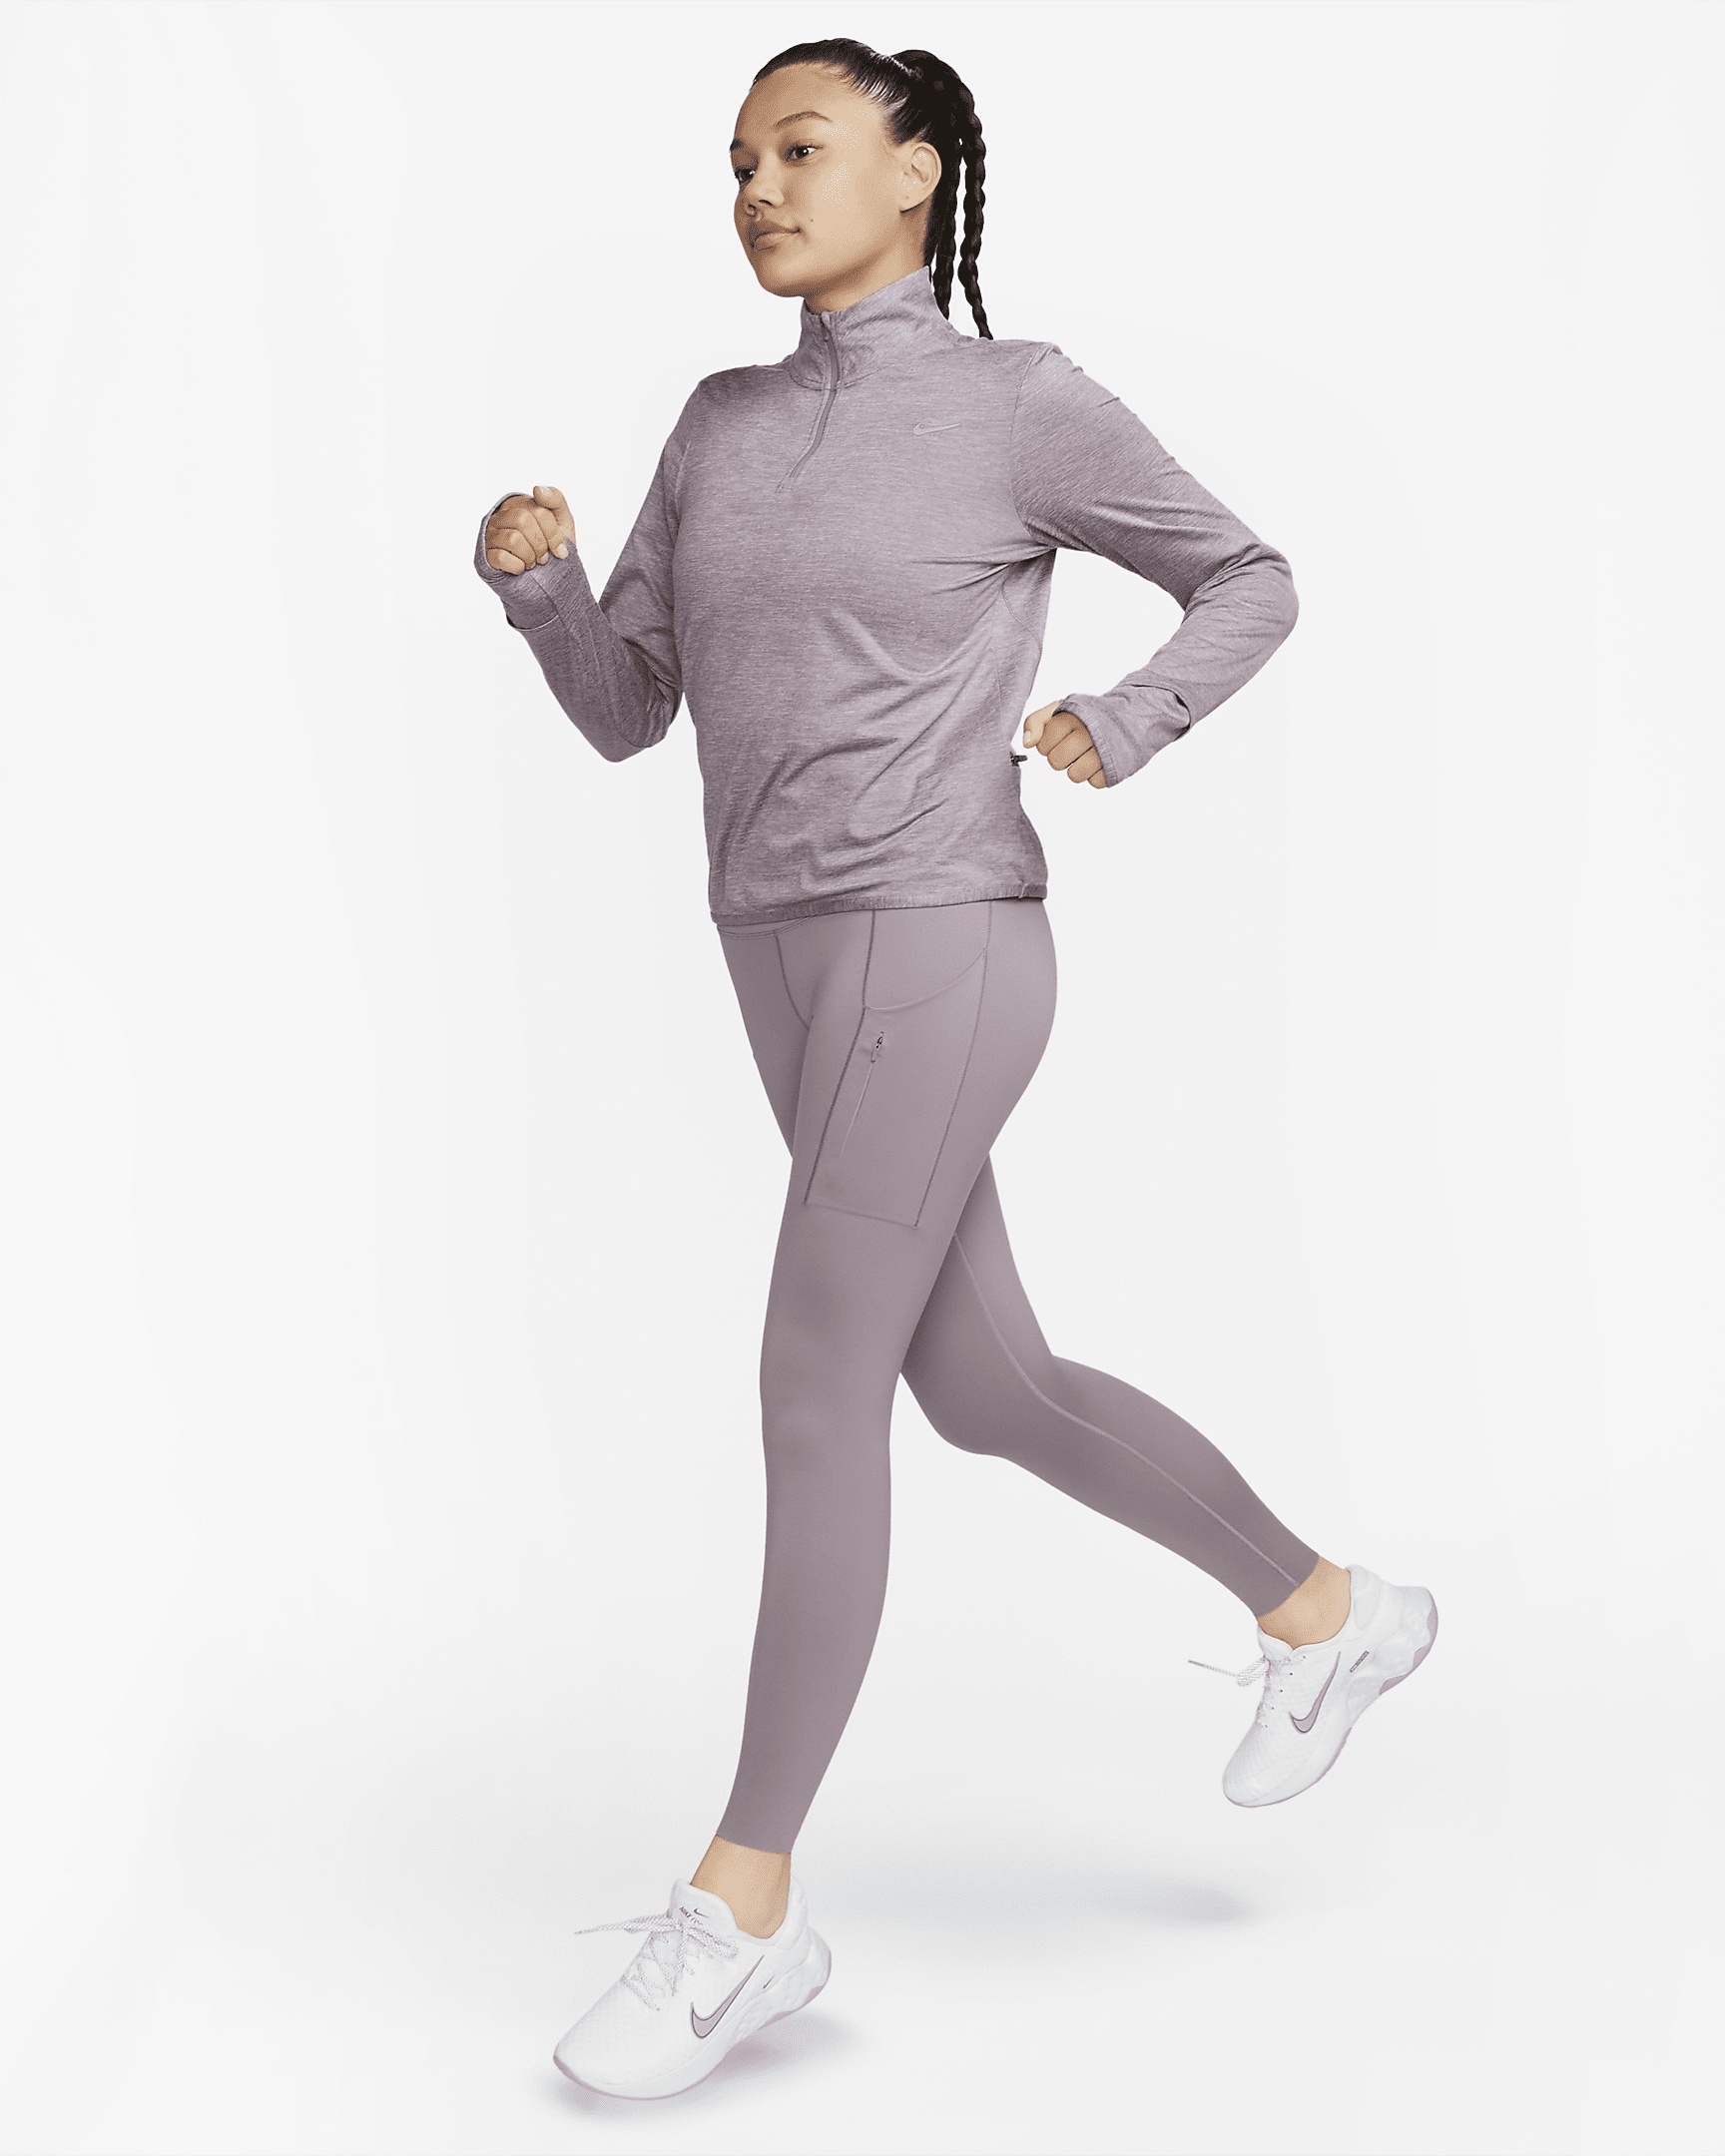 Nike Women's Swift Element UV Protection 1/4-Zip Running Top - 7